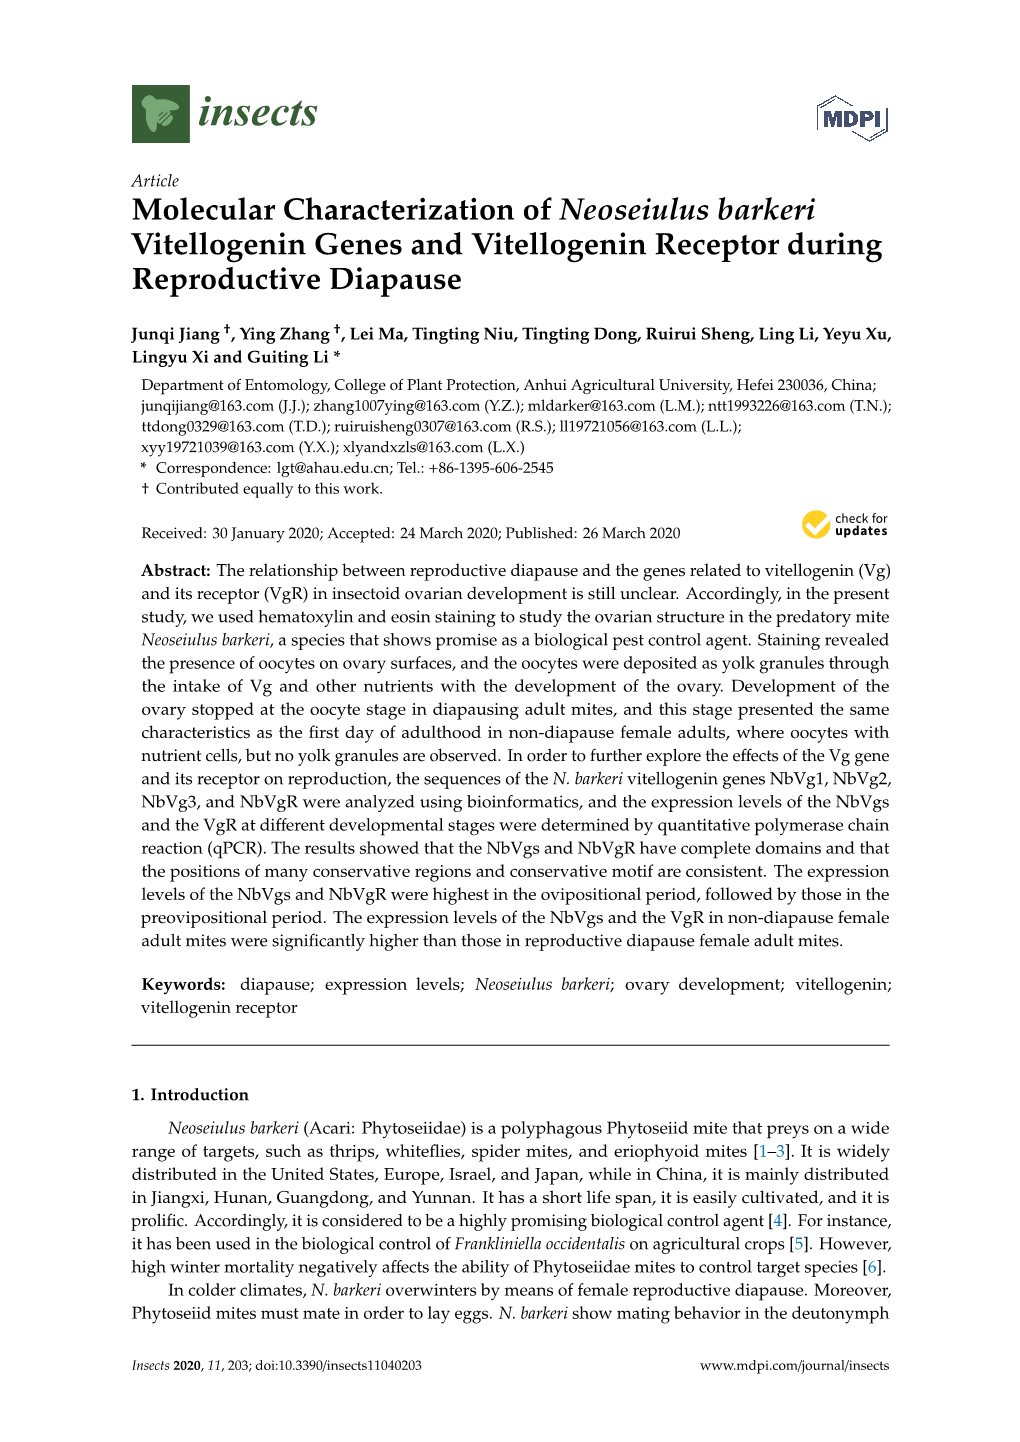 Molecular Characterization of Neoseiulus Barkeri Vitellogenin Genes and Vitellogenin Receptor During Reproductive Diapause